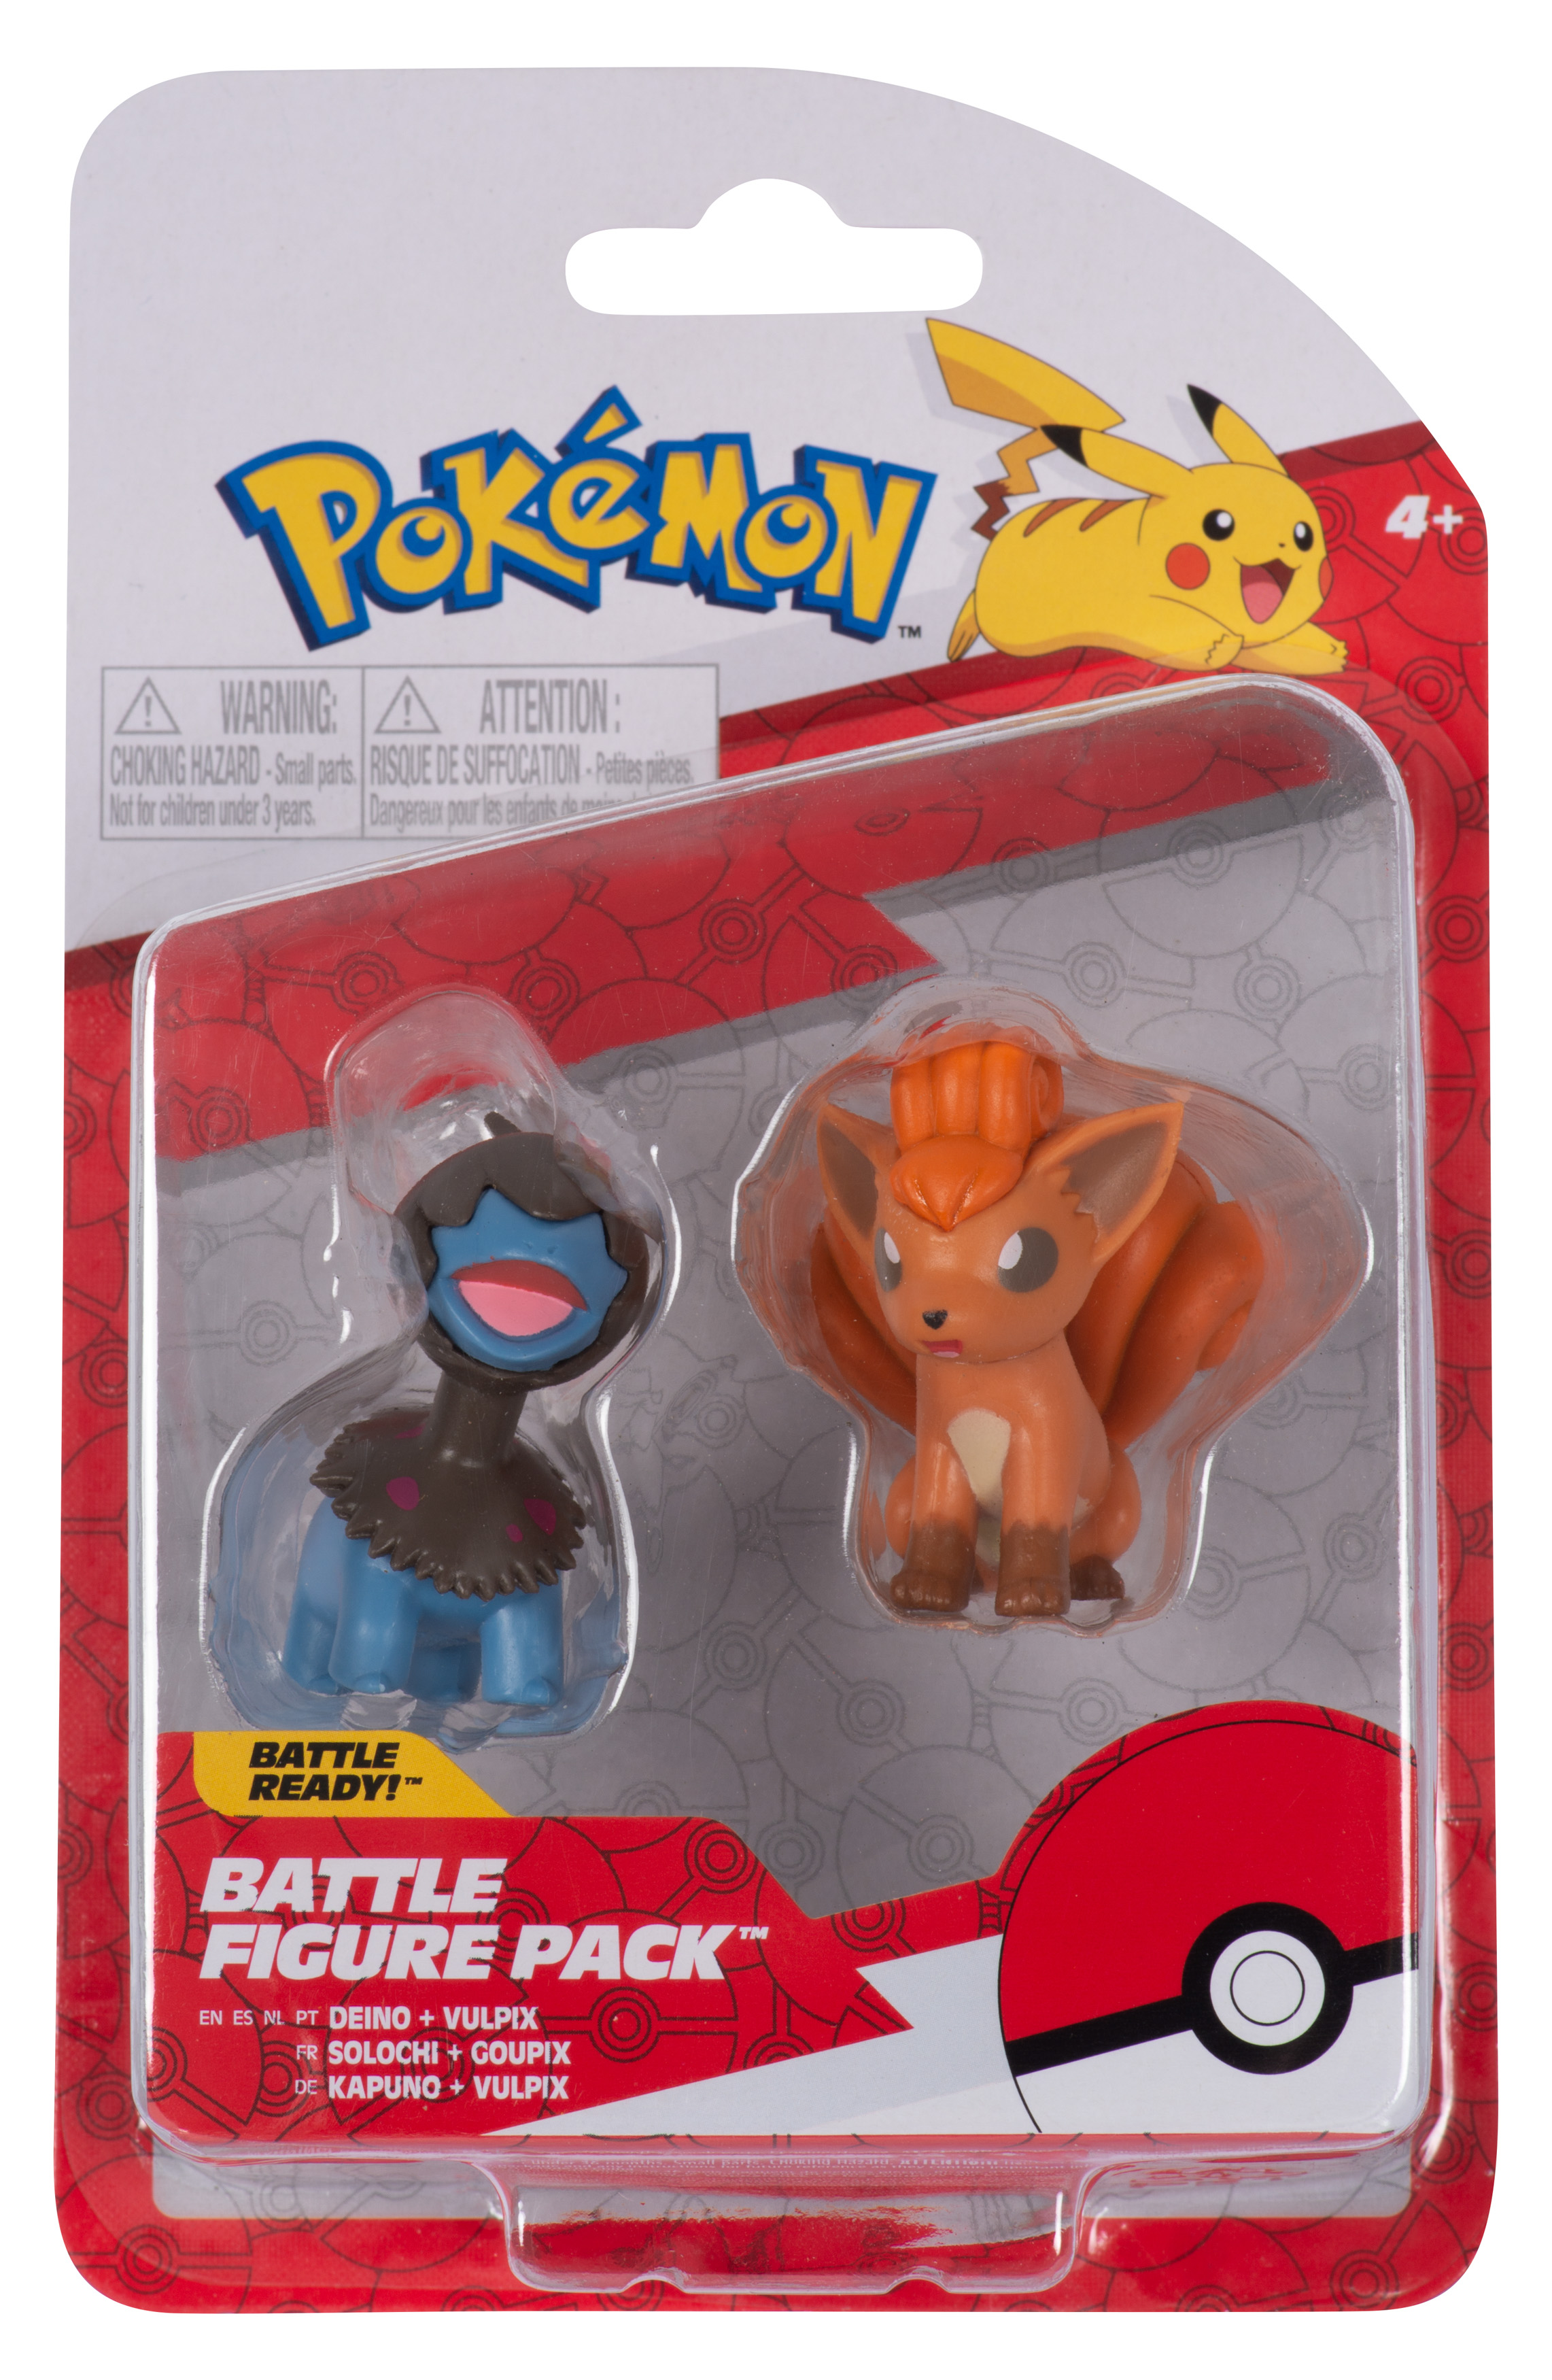 Pokémon - Battle Figure Pack - Vulpix & Larvitar